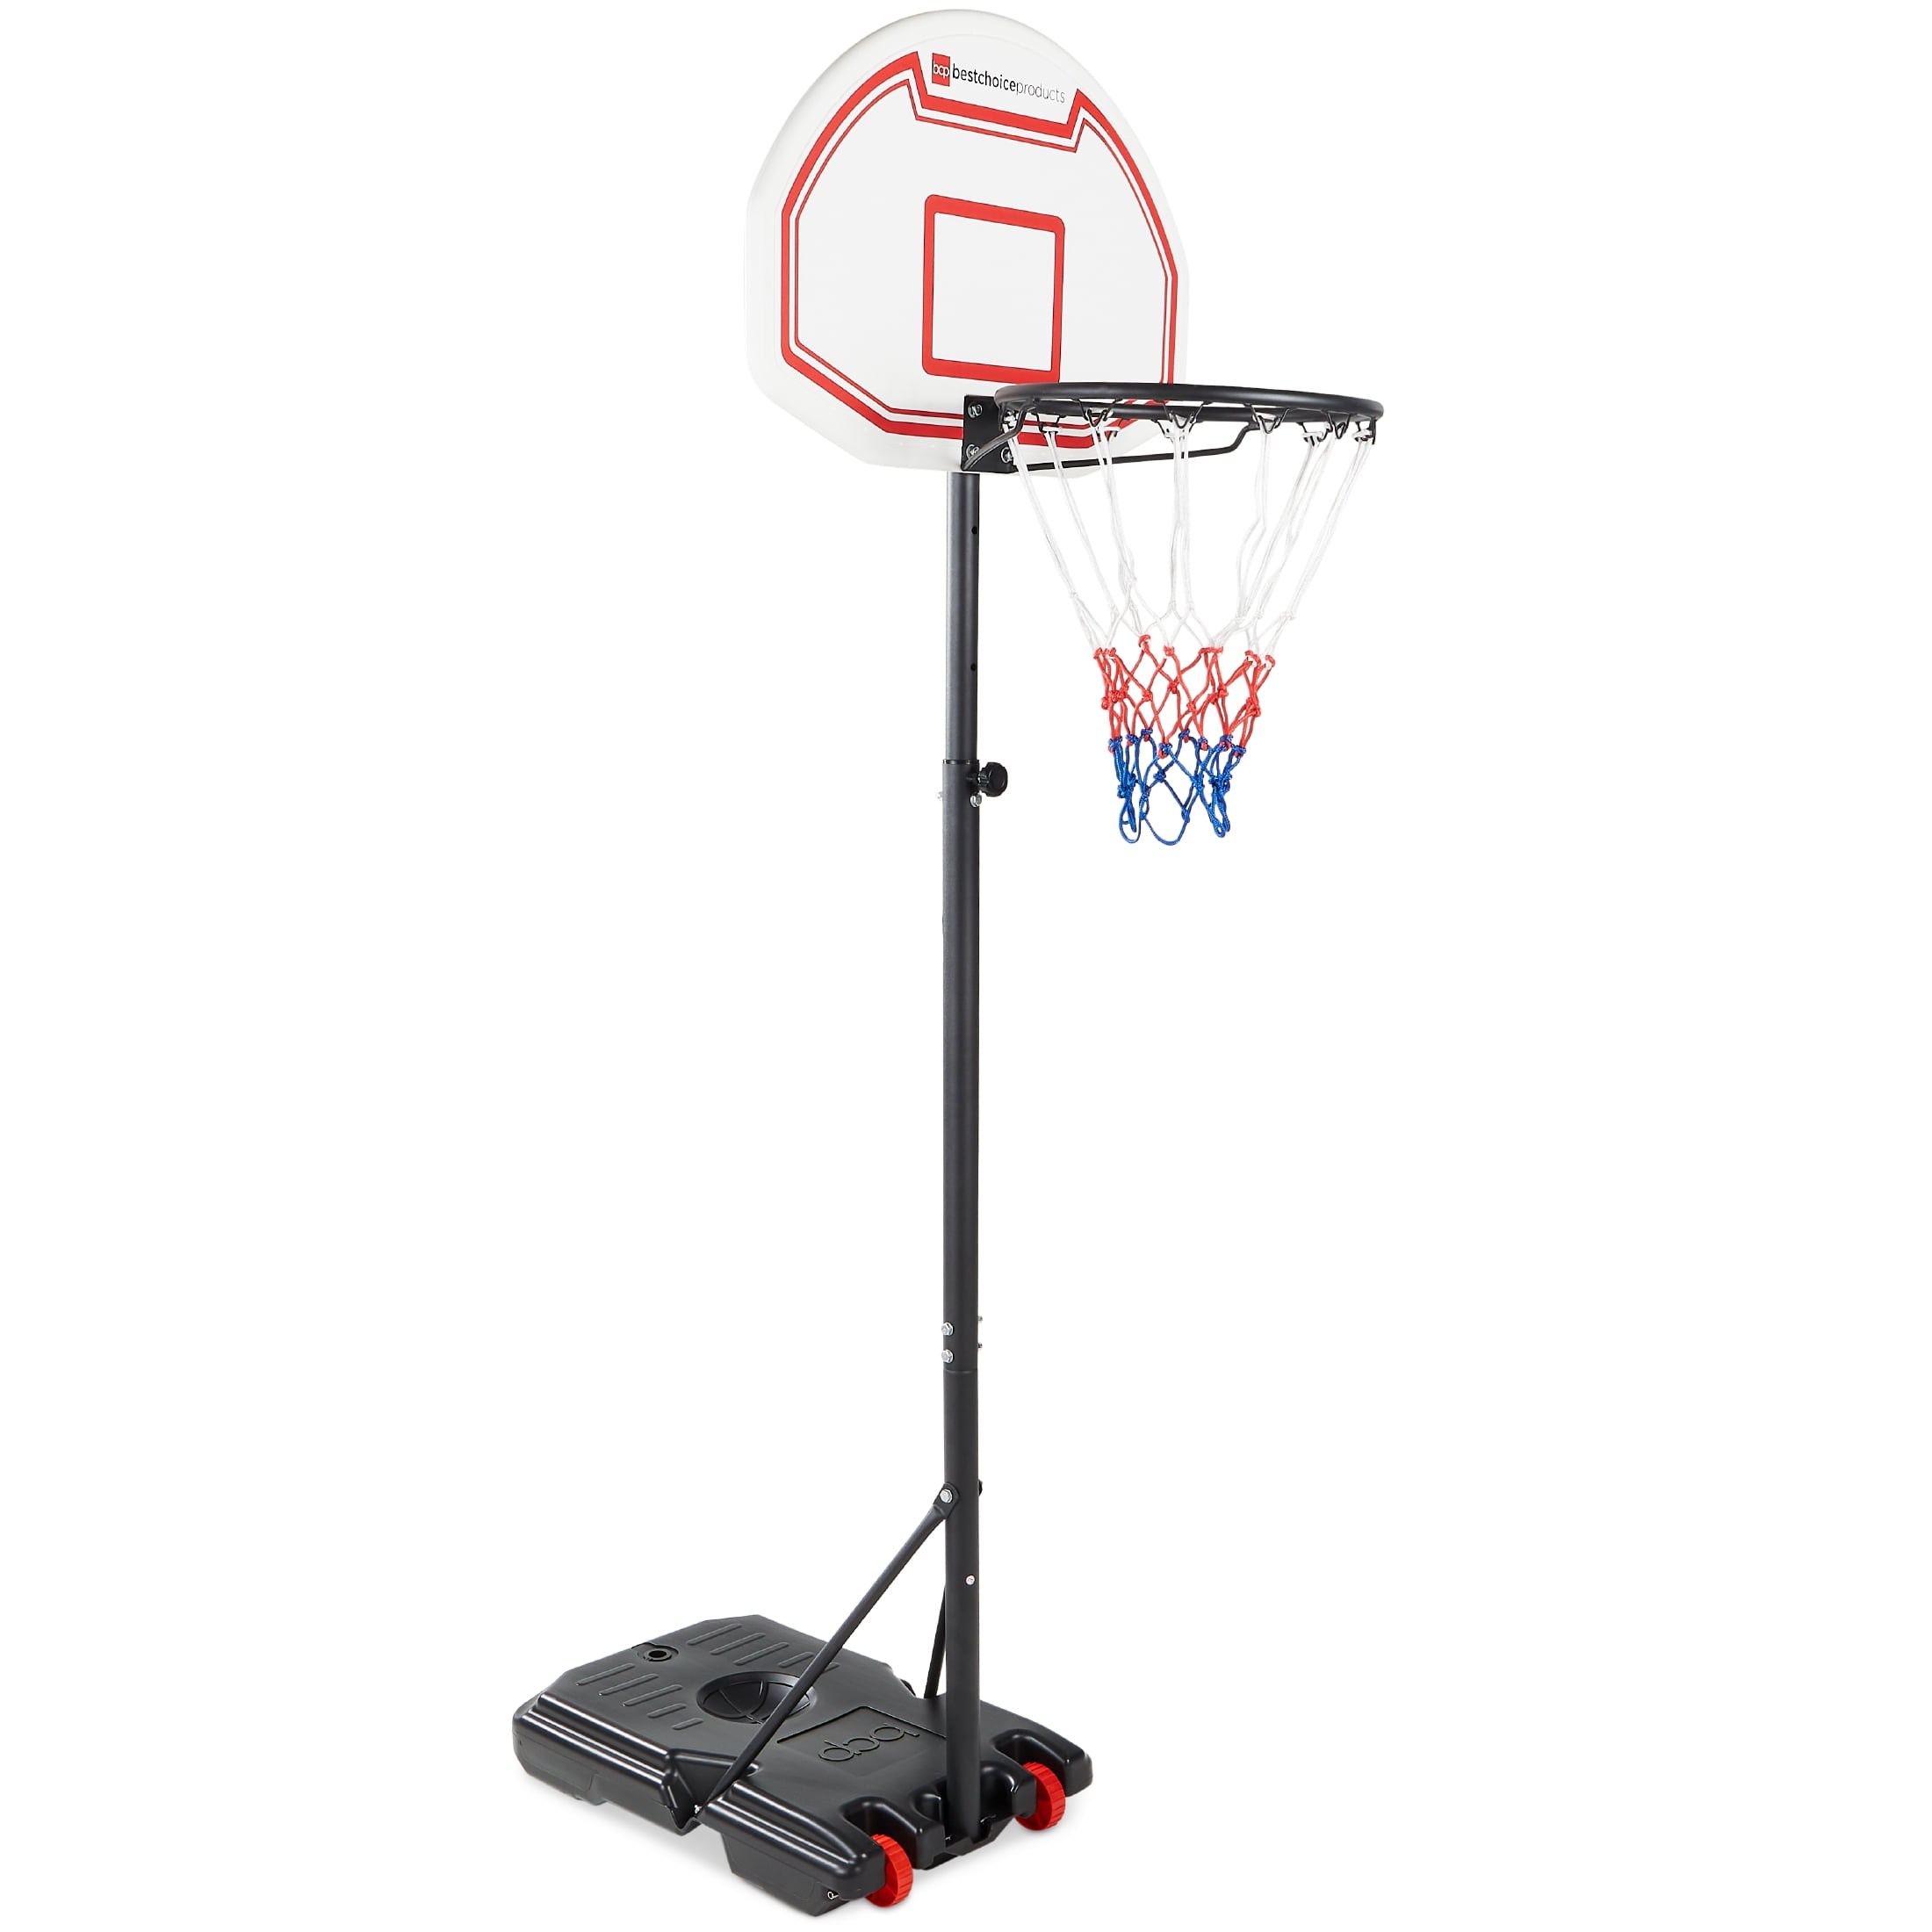 Height Adjustable Basketball Hoop Kid System Portable Basketball Goal Outdoor US